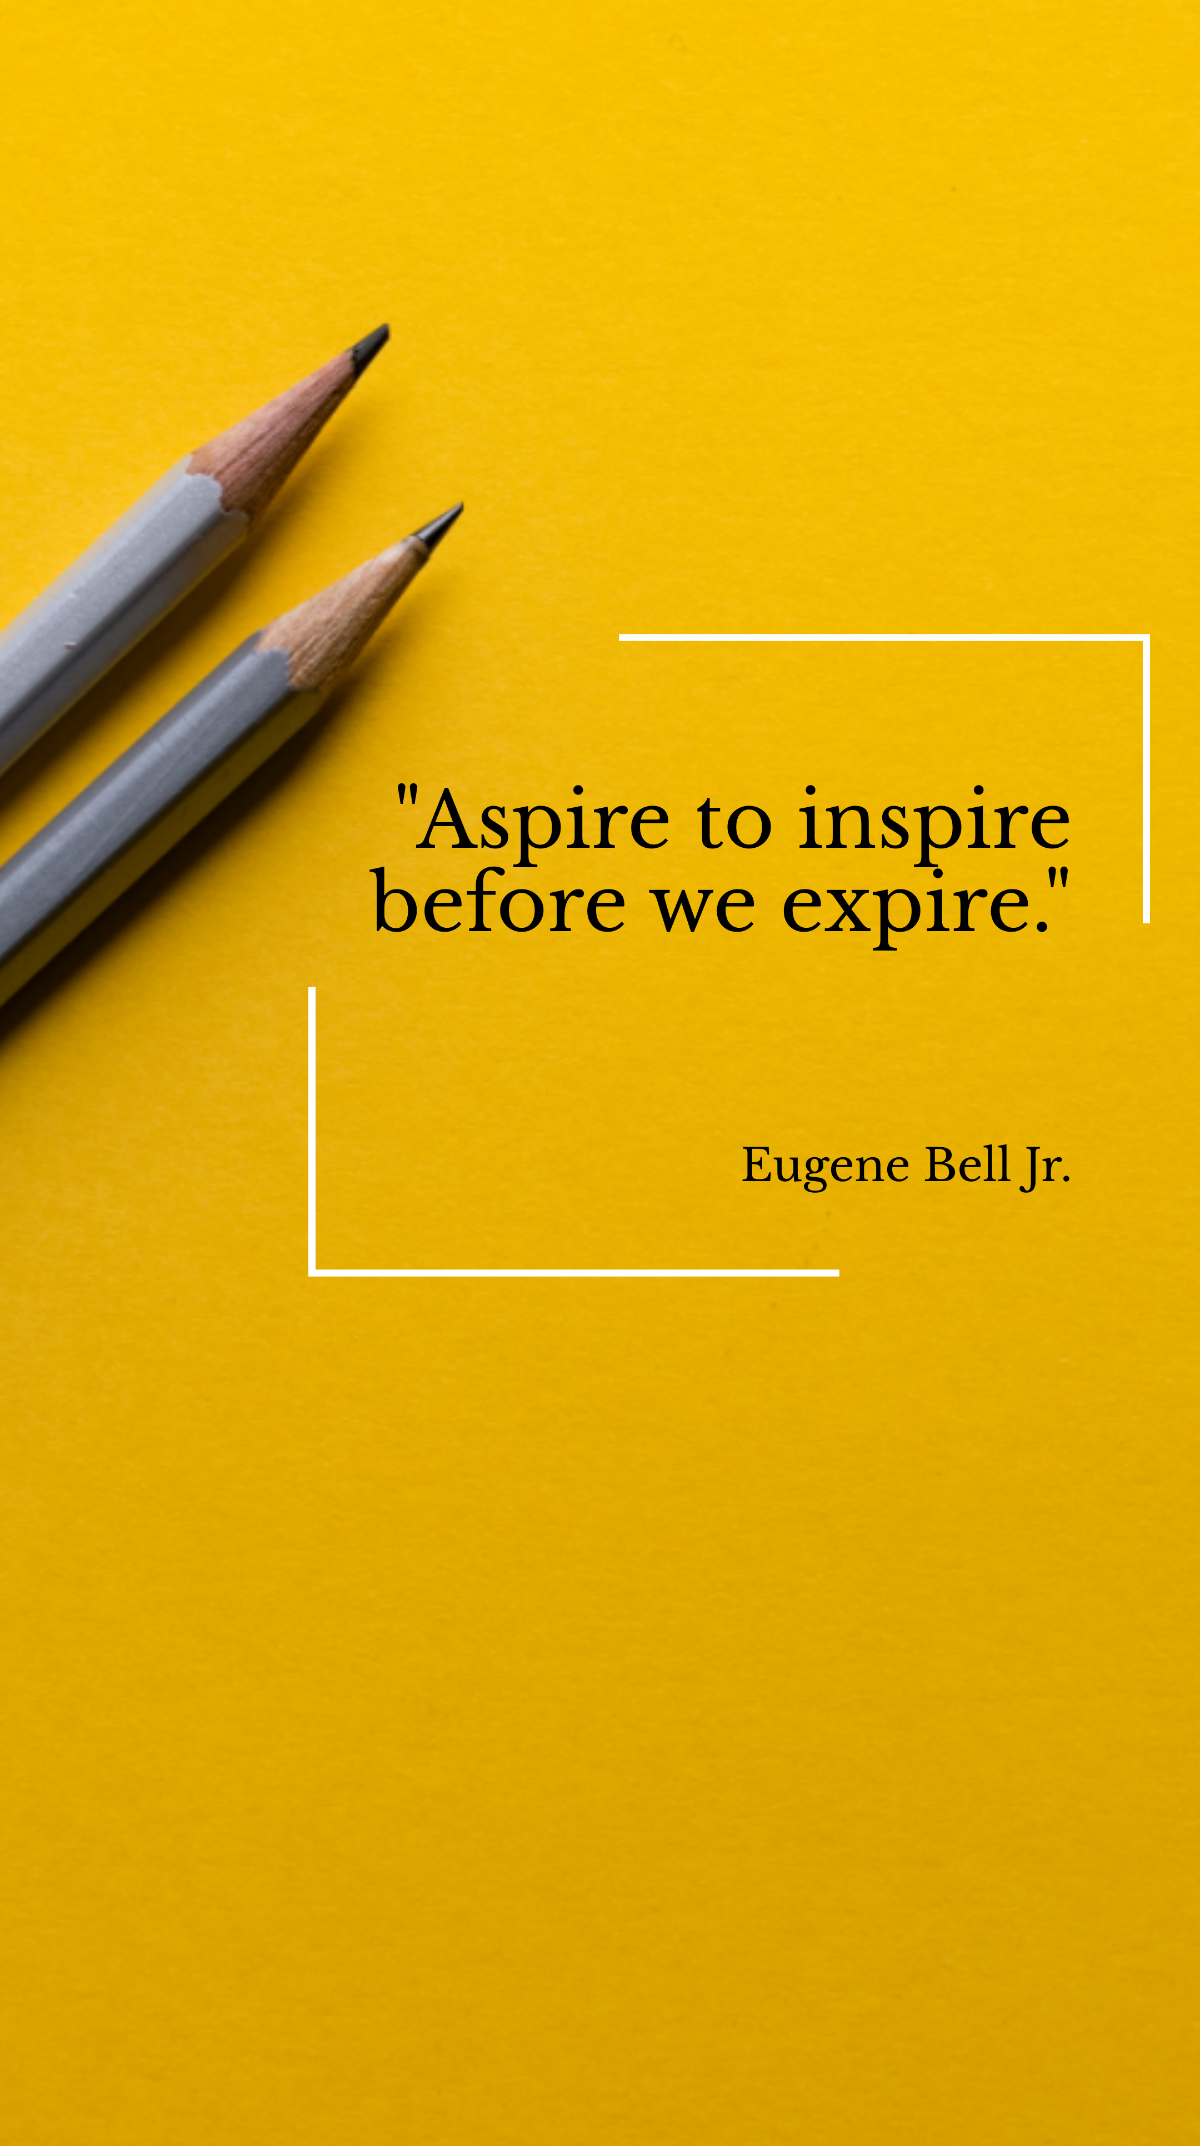 Eugene Bell Jr. - Aspire to inspire before we expire Template